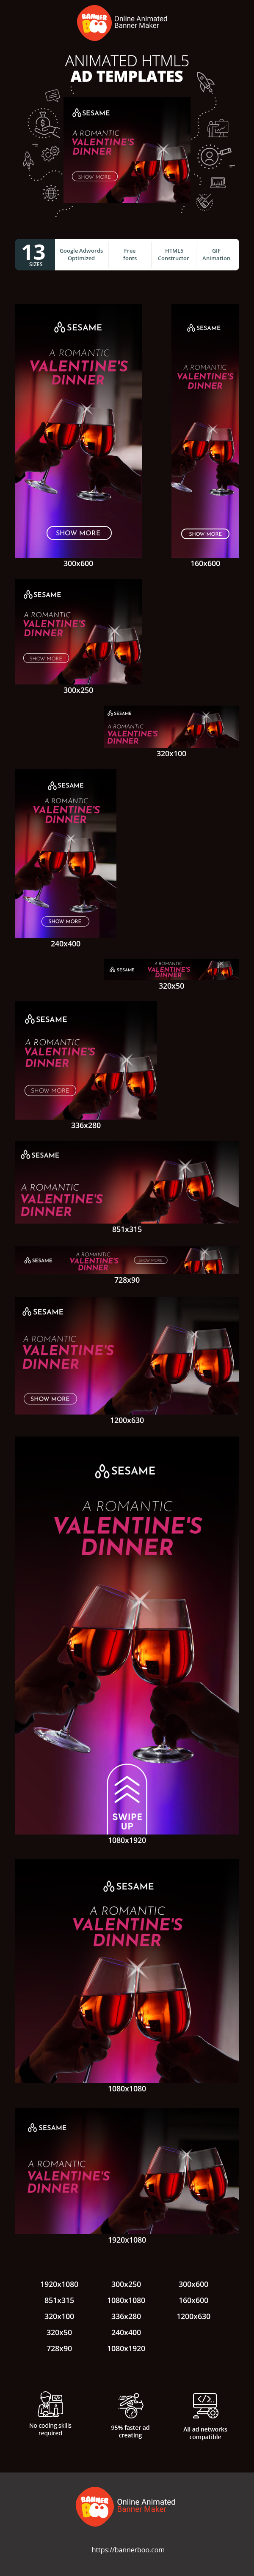 Banner ad template — A Romantic Valentine's Dinner —Restaurant